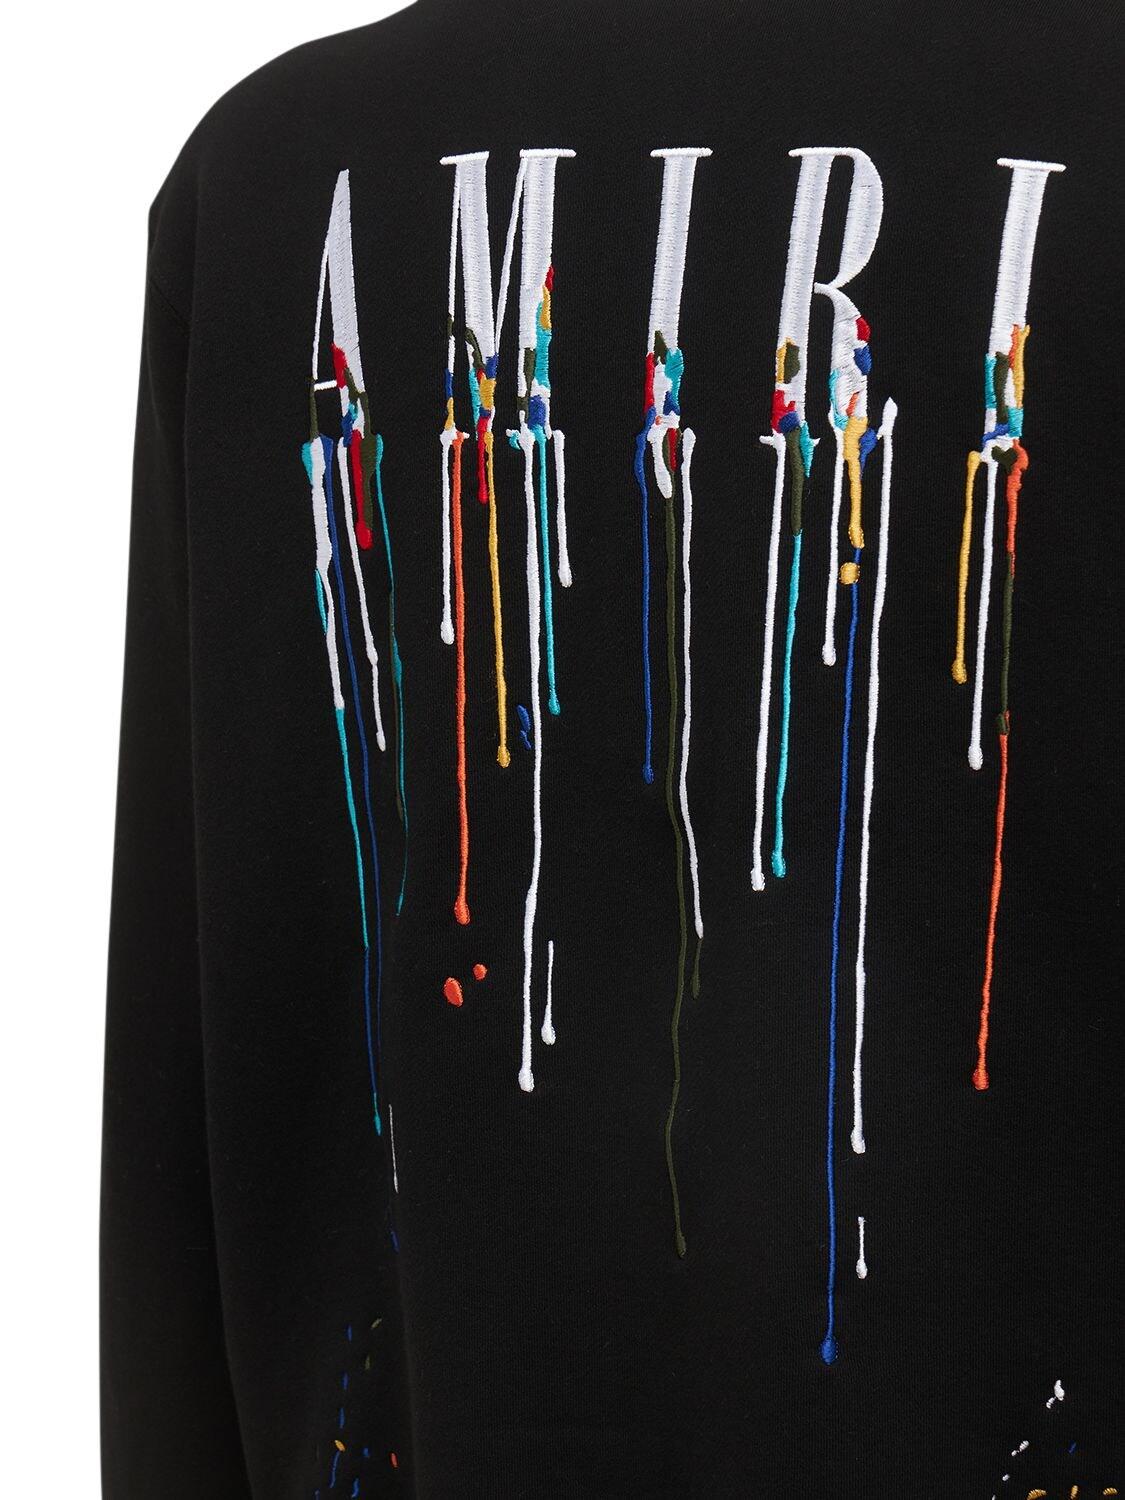 Rhud Amiri Paint Drip Shirt, hoodie, sweater, longsleeve and V-neck T-shirt